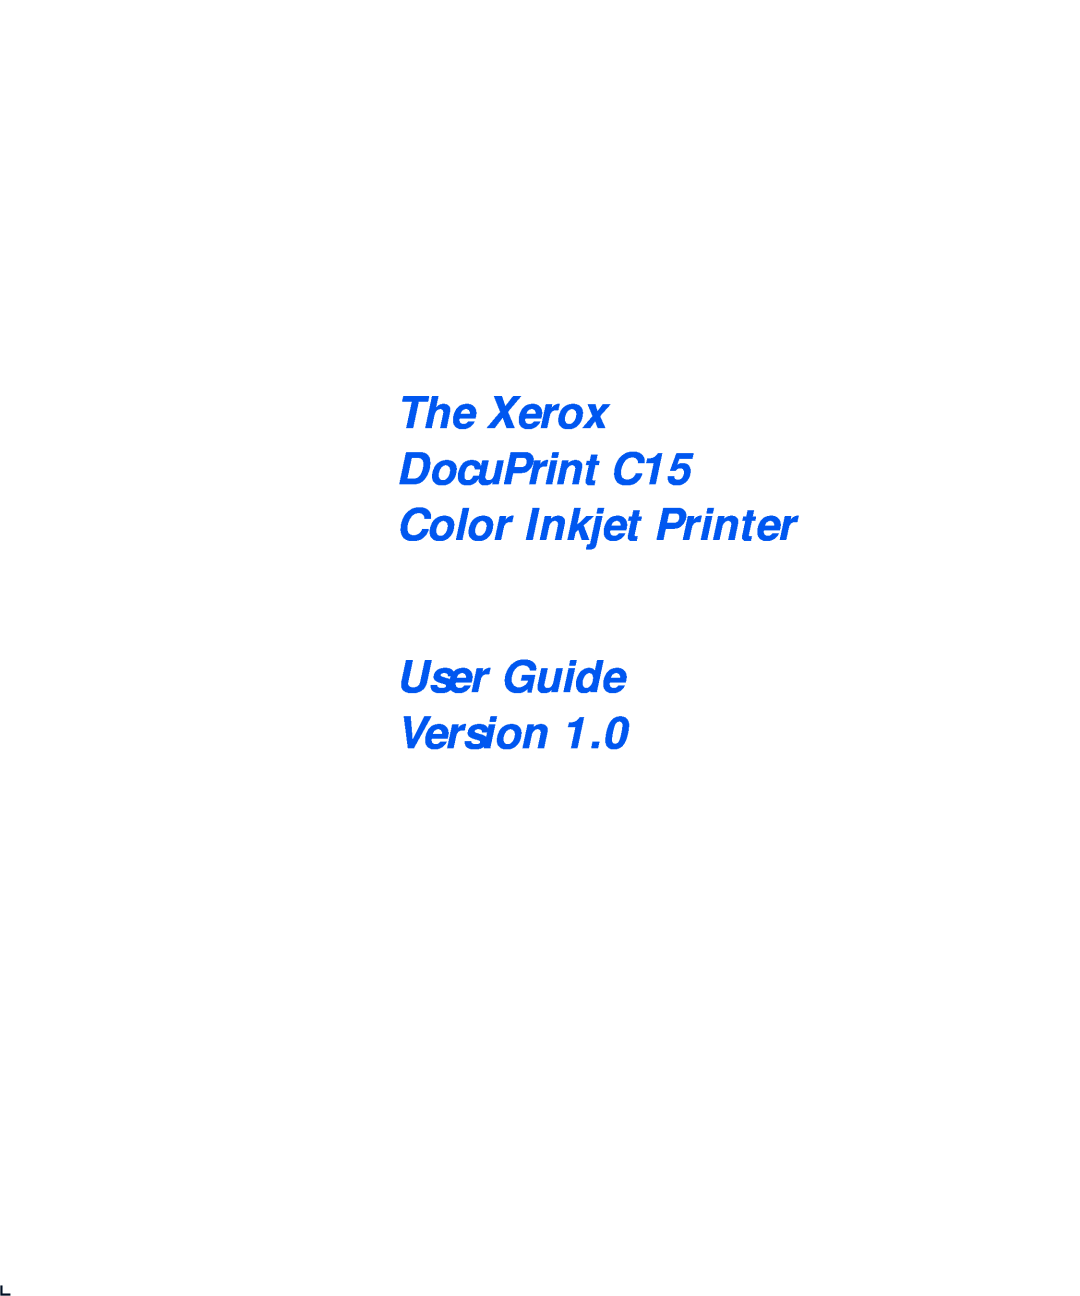 Xerox manual The Xerox DocuPrint C15 Color Inkjet Printer, User Guide Version 